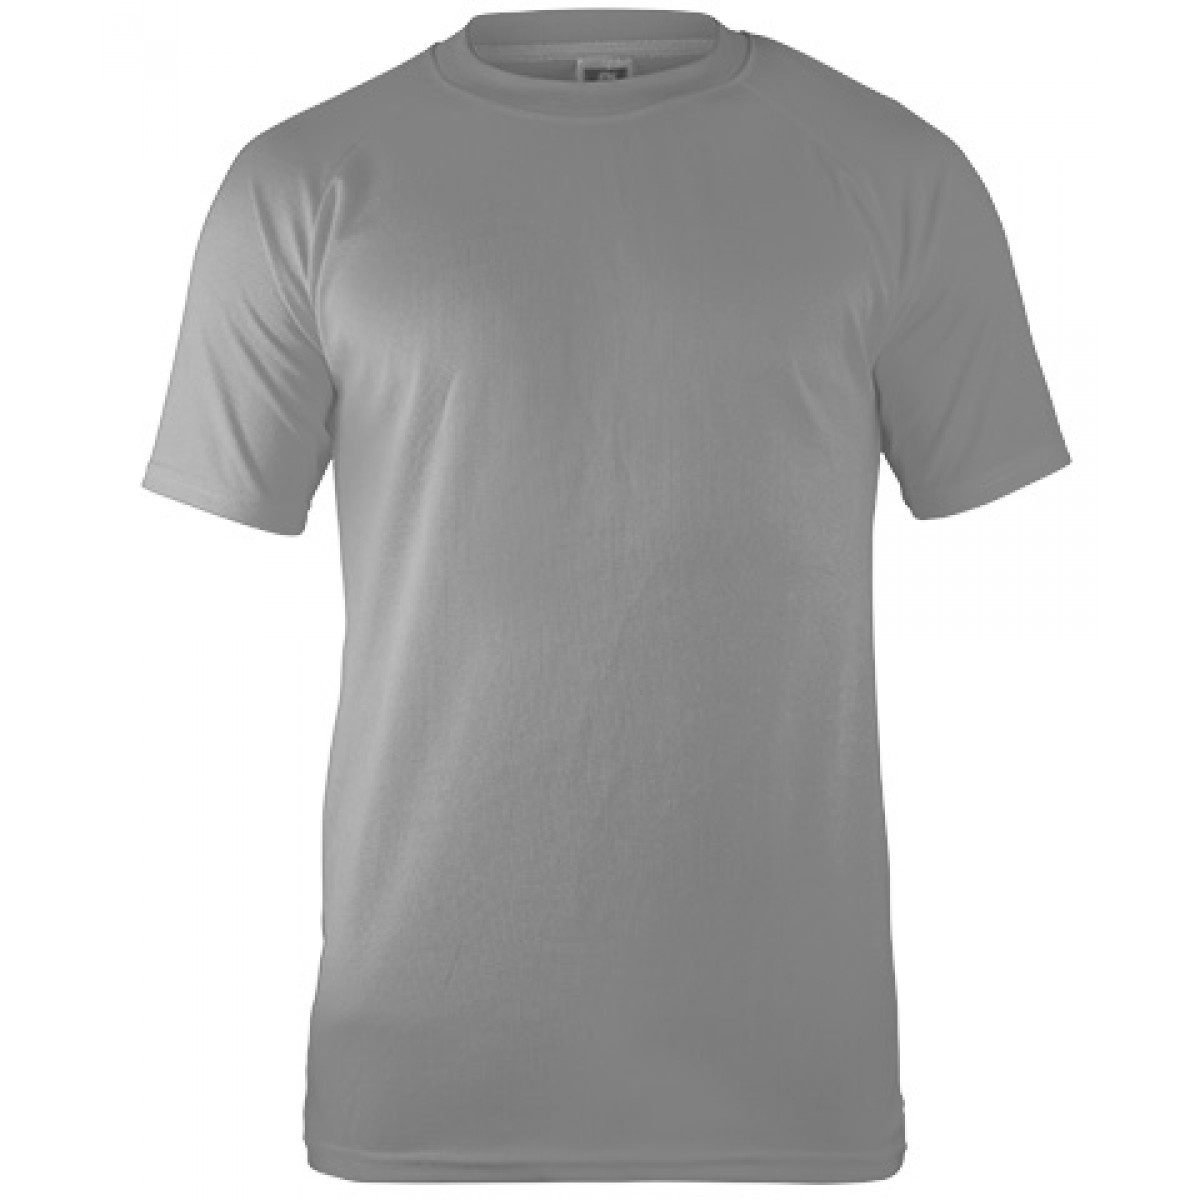 Performance T-shirt-Gray -S